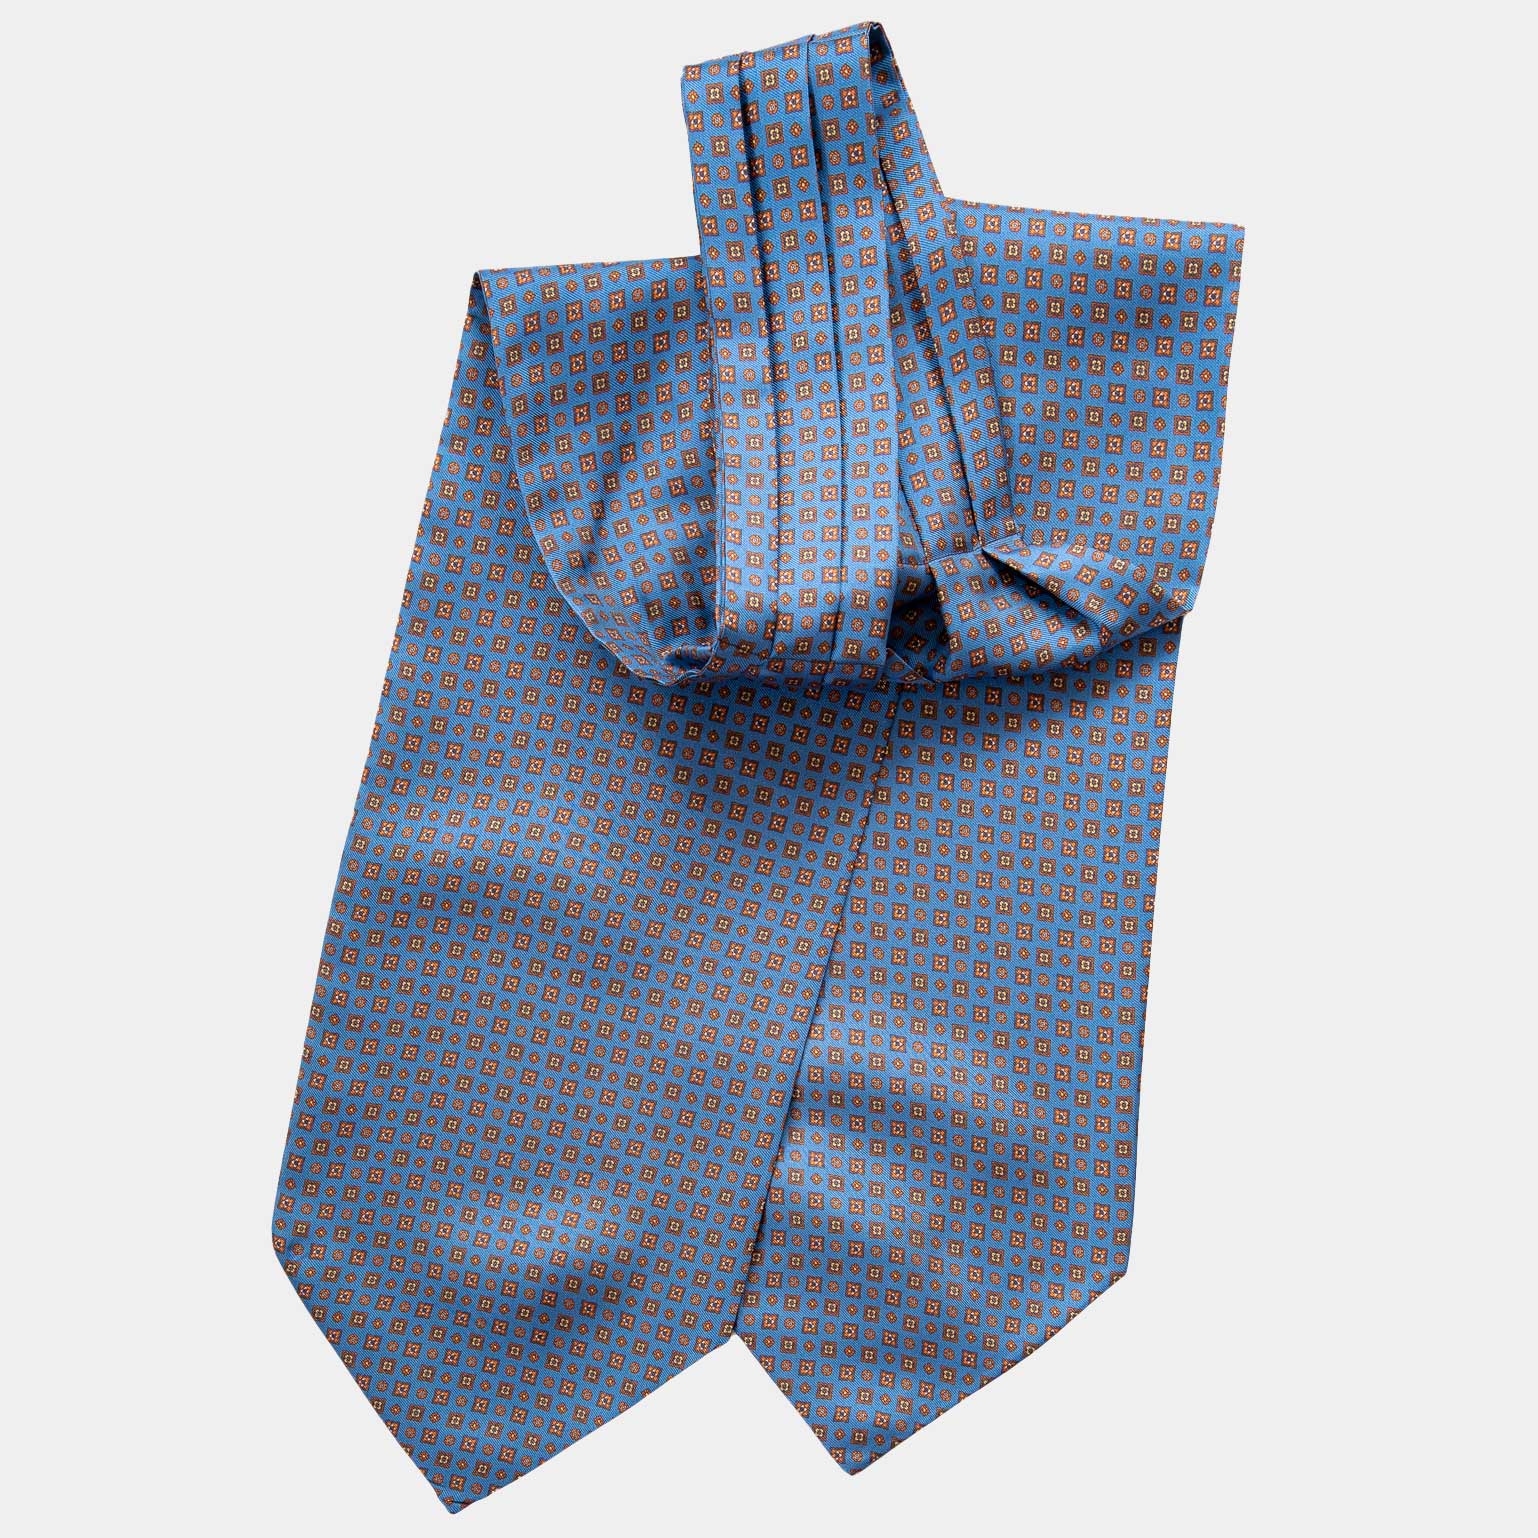 Blue Ascot Cravat Necktie - 100% Made in Italy